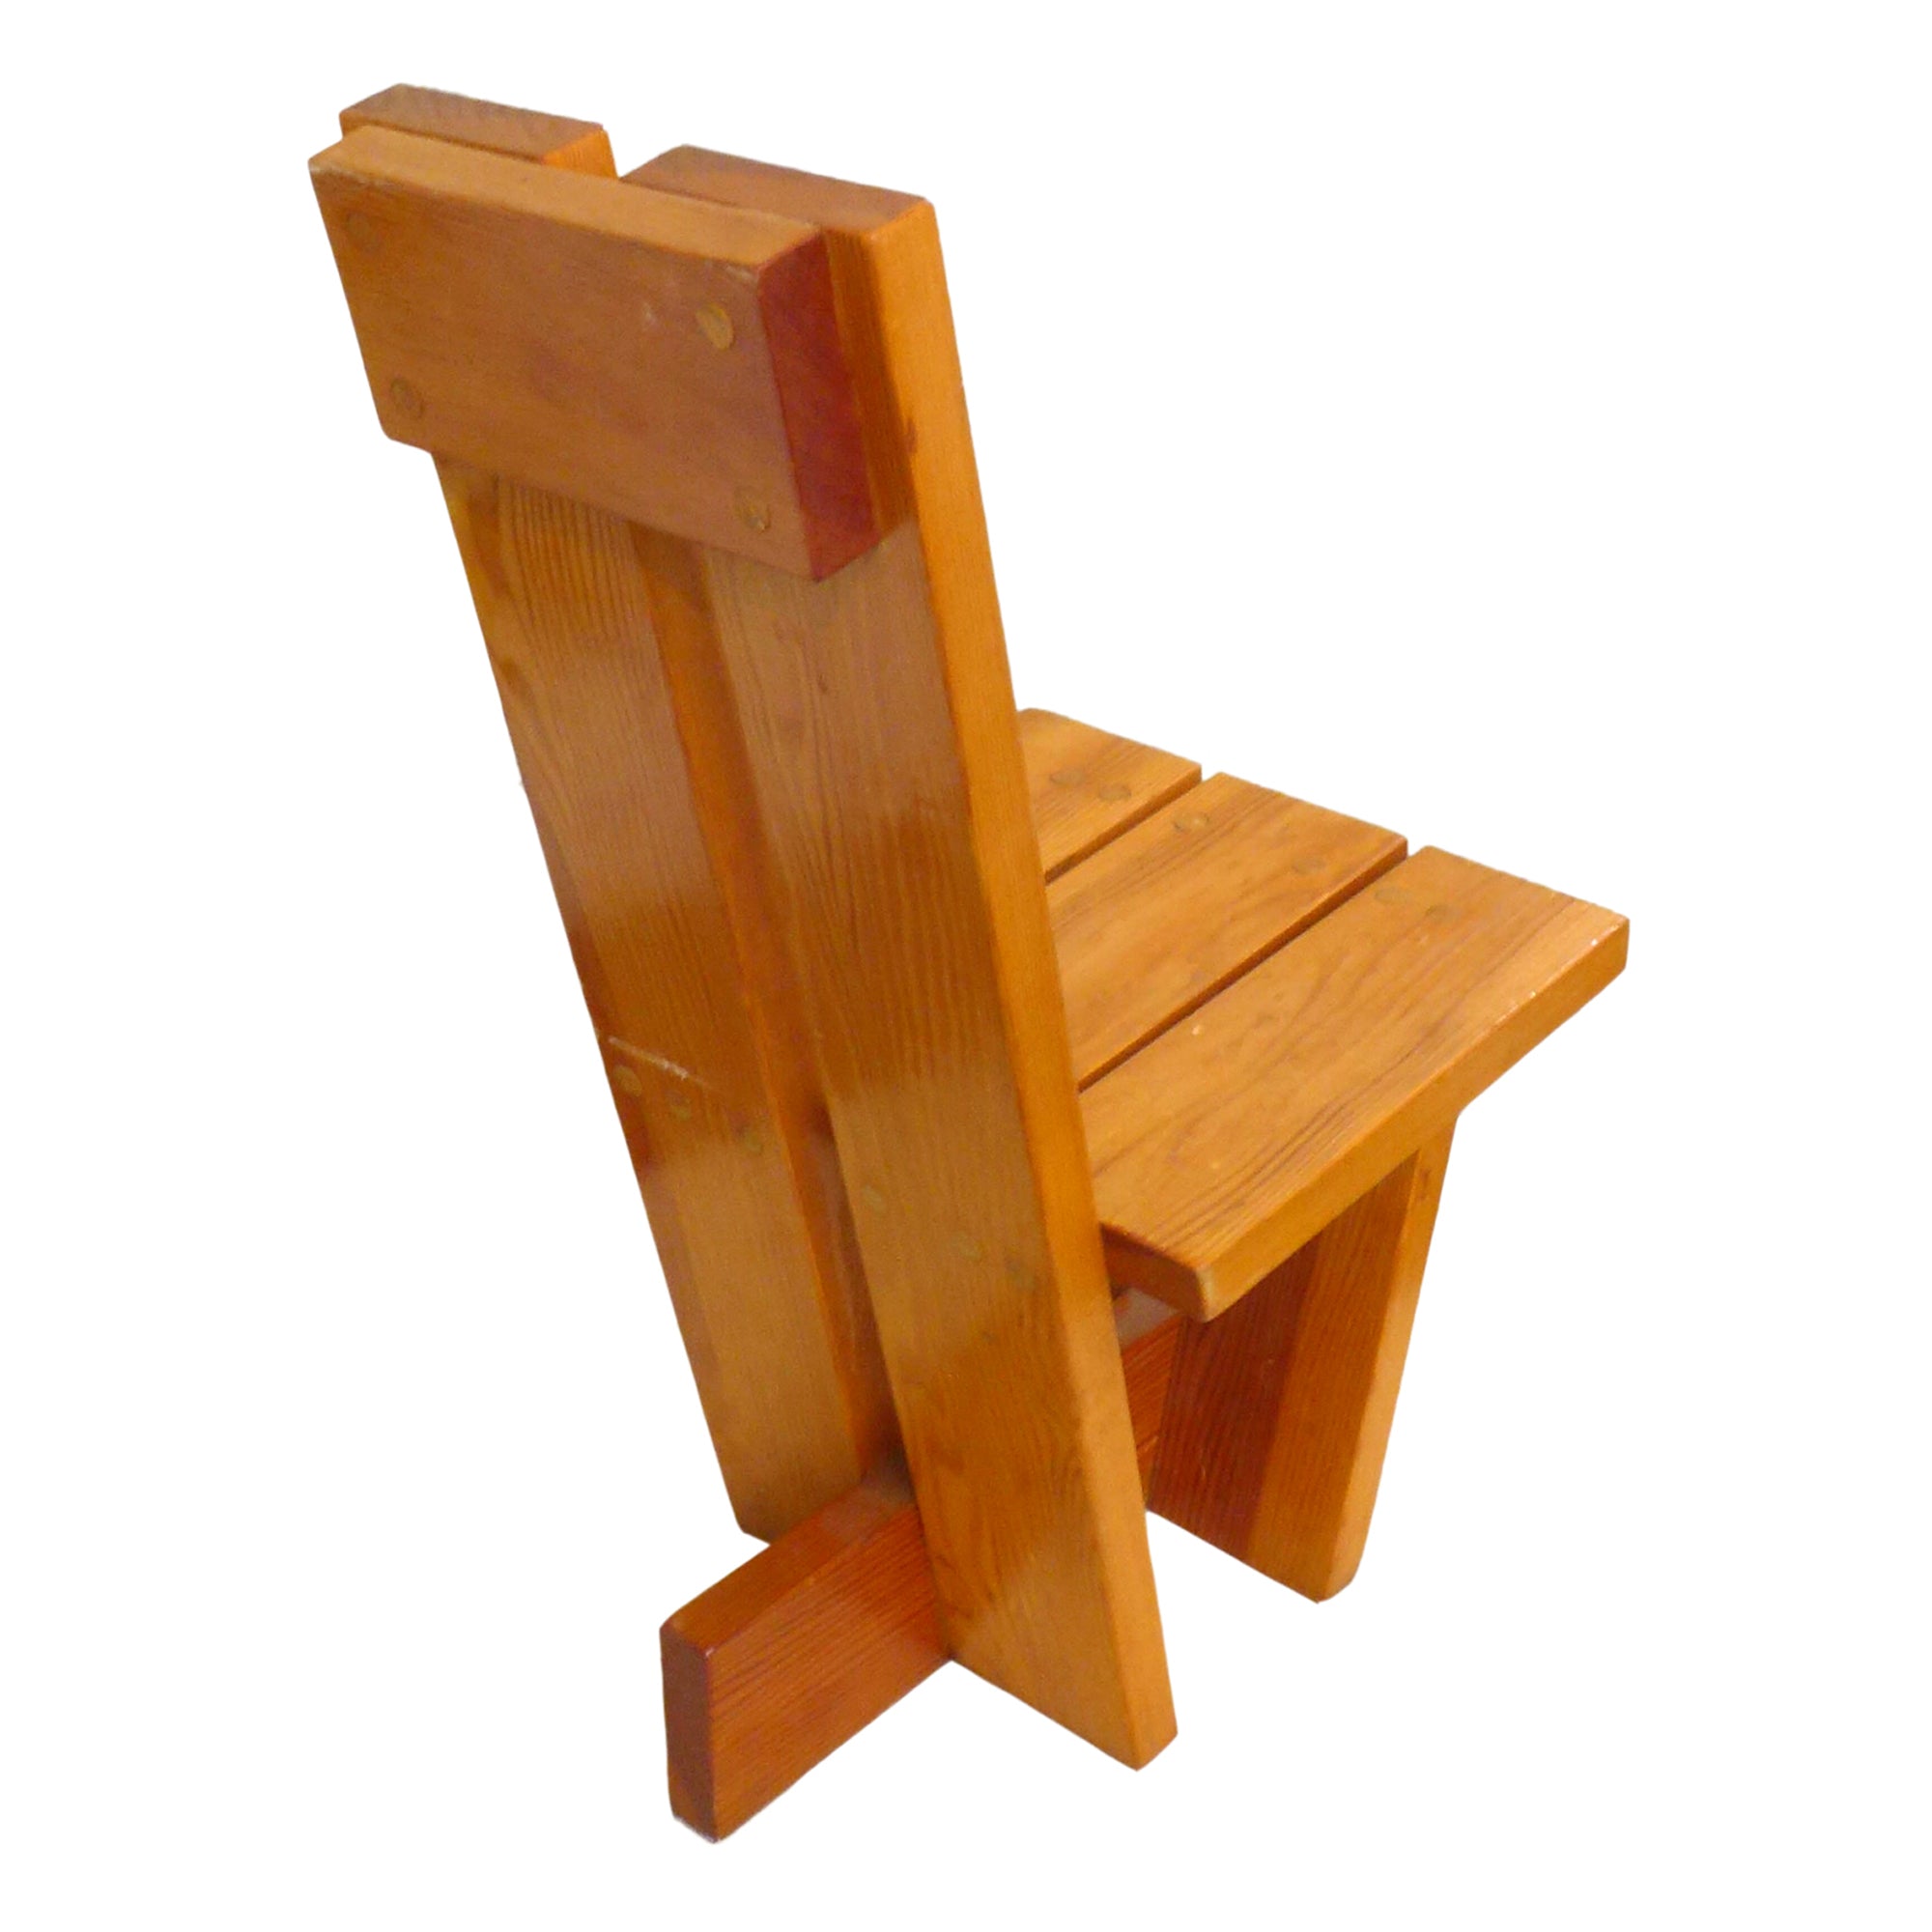 Constructivist Wood Side Chair